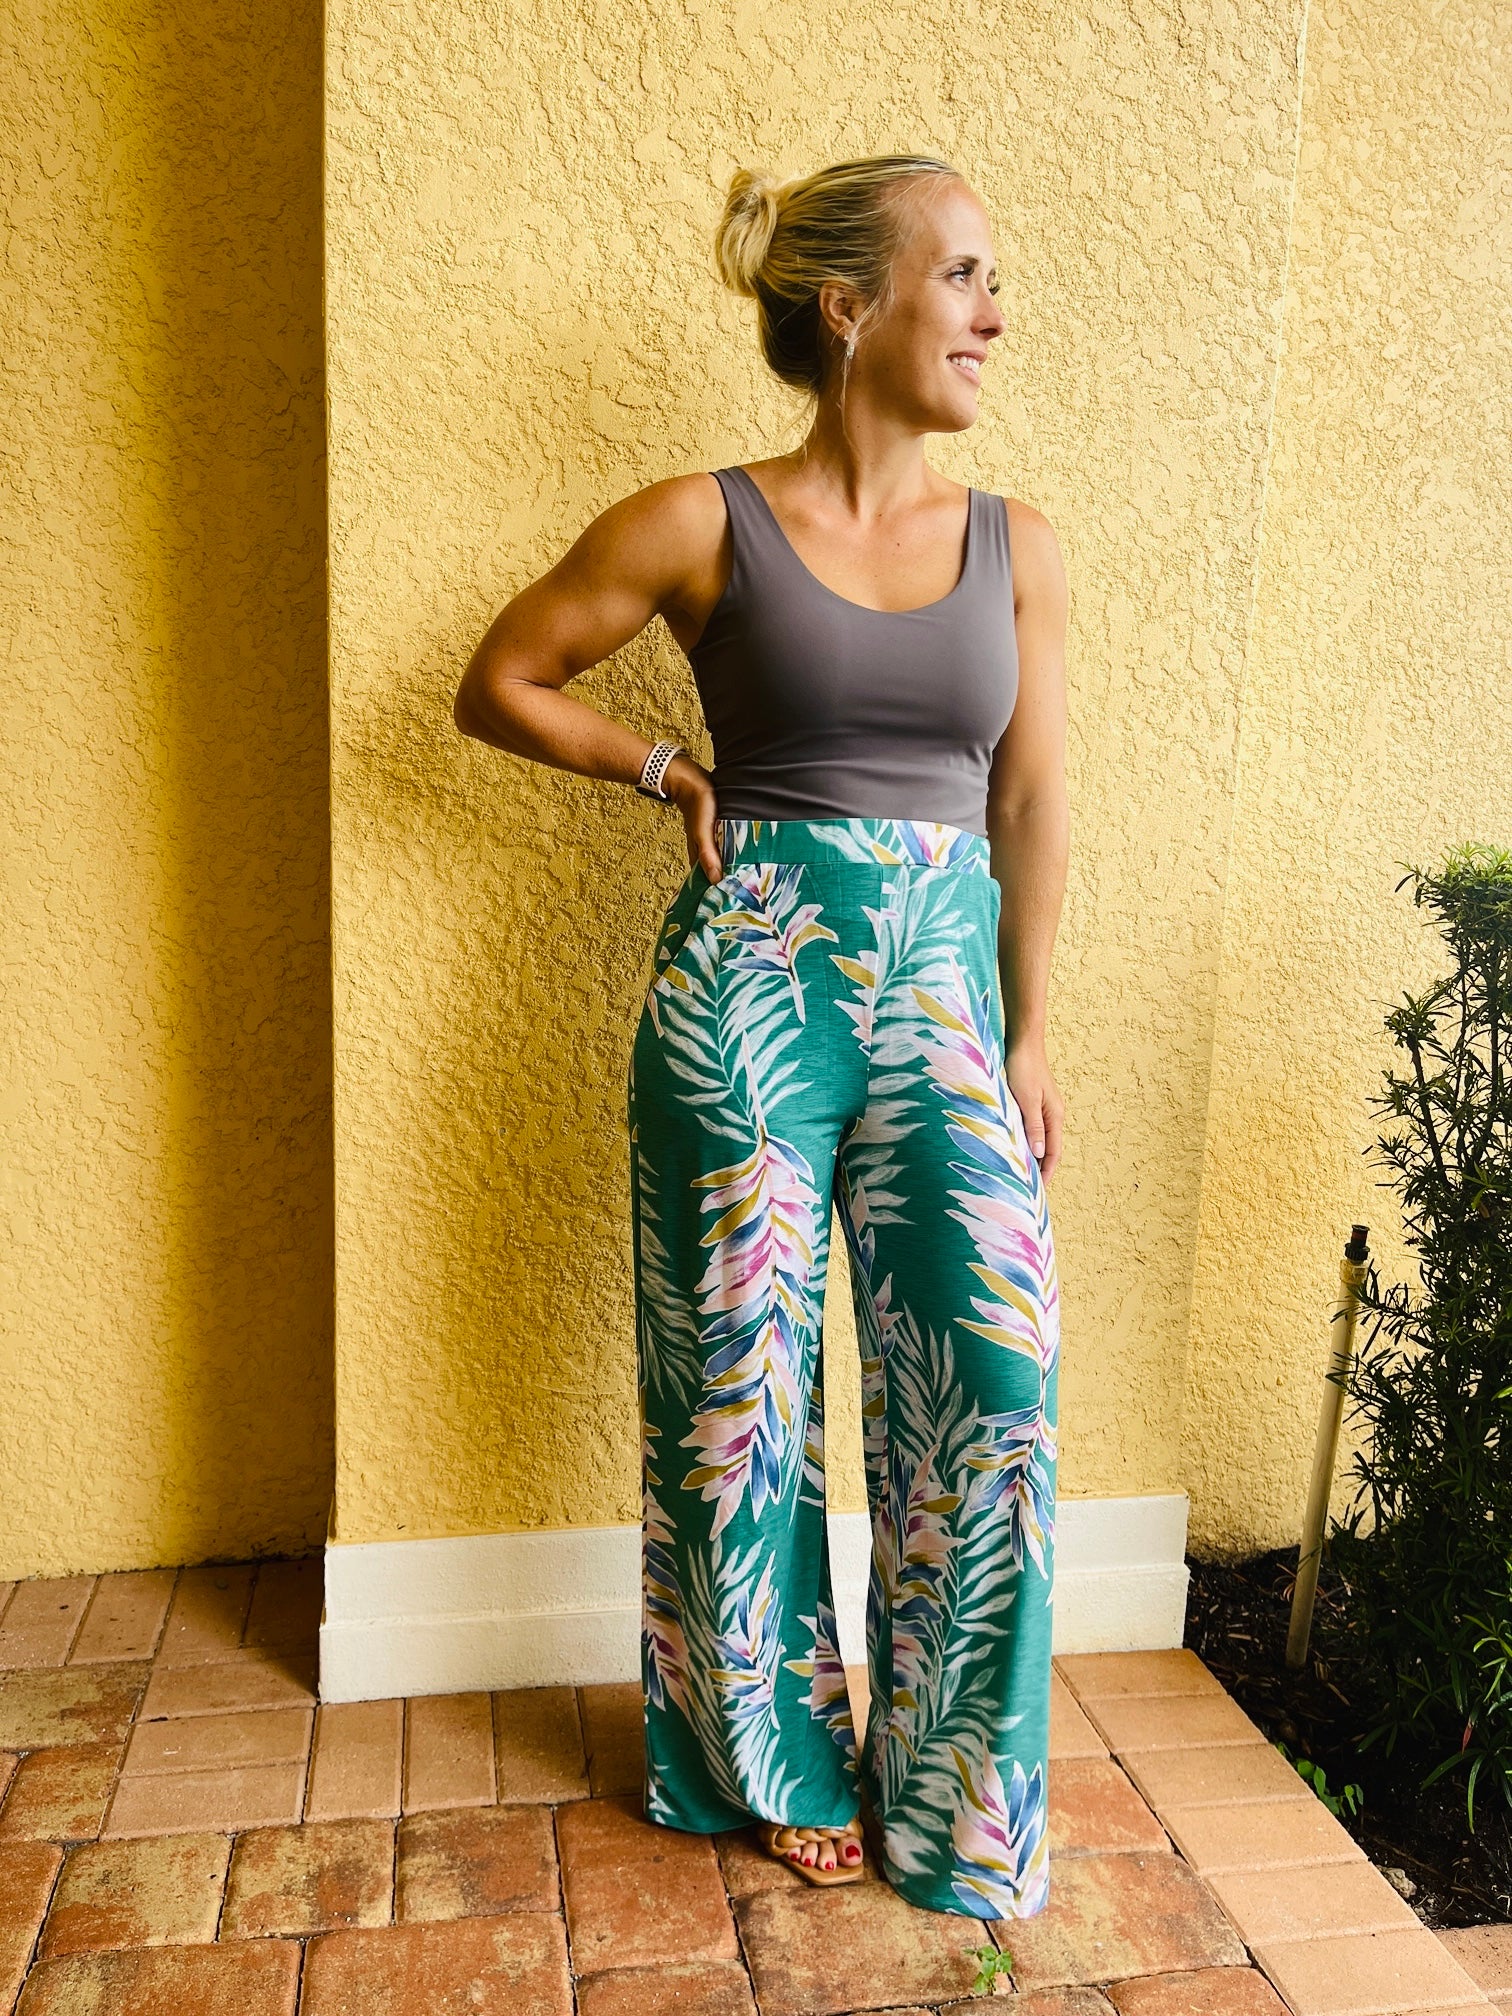 Hawaiiana Floral Print Pants